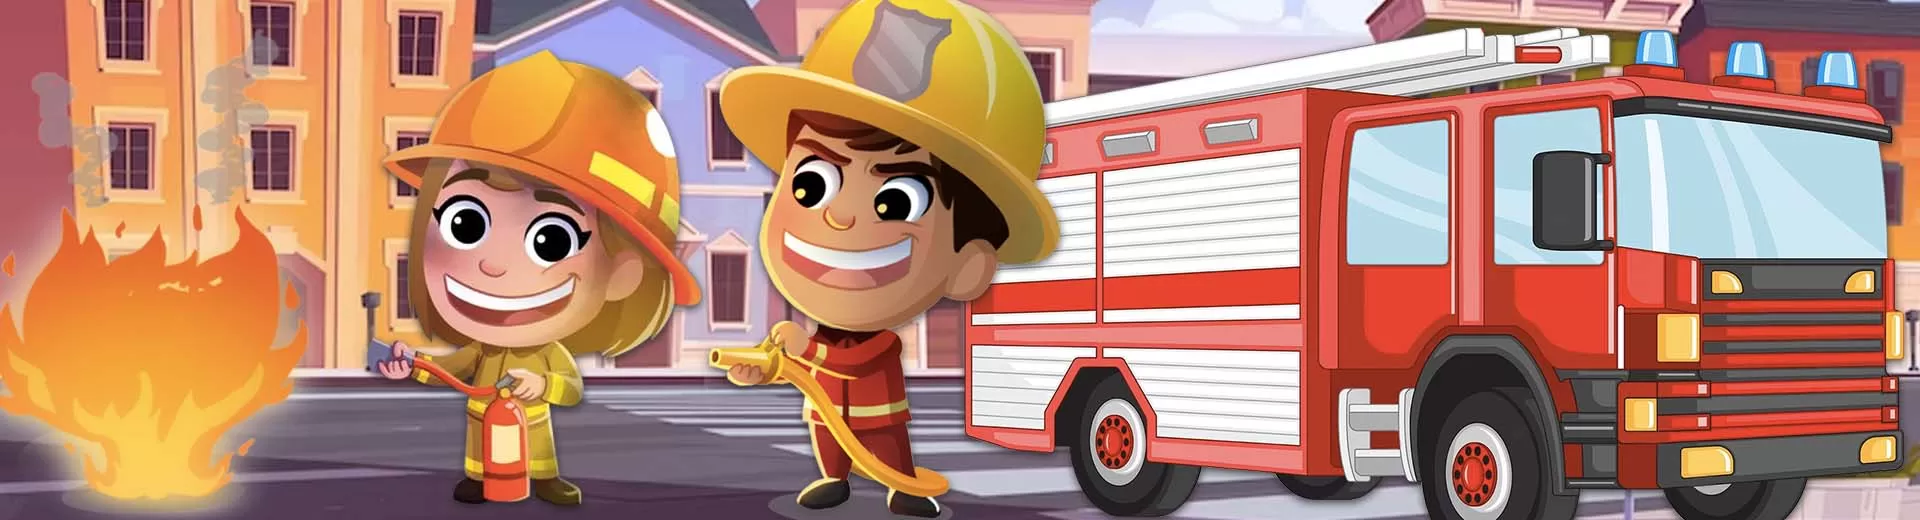 Idle Firefighter Tycoon Emulator Pc